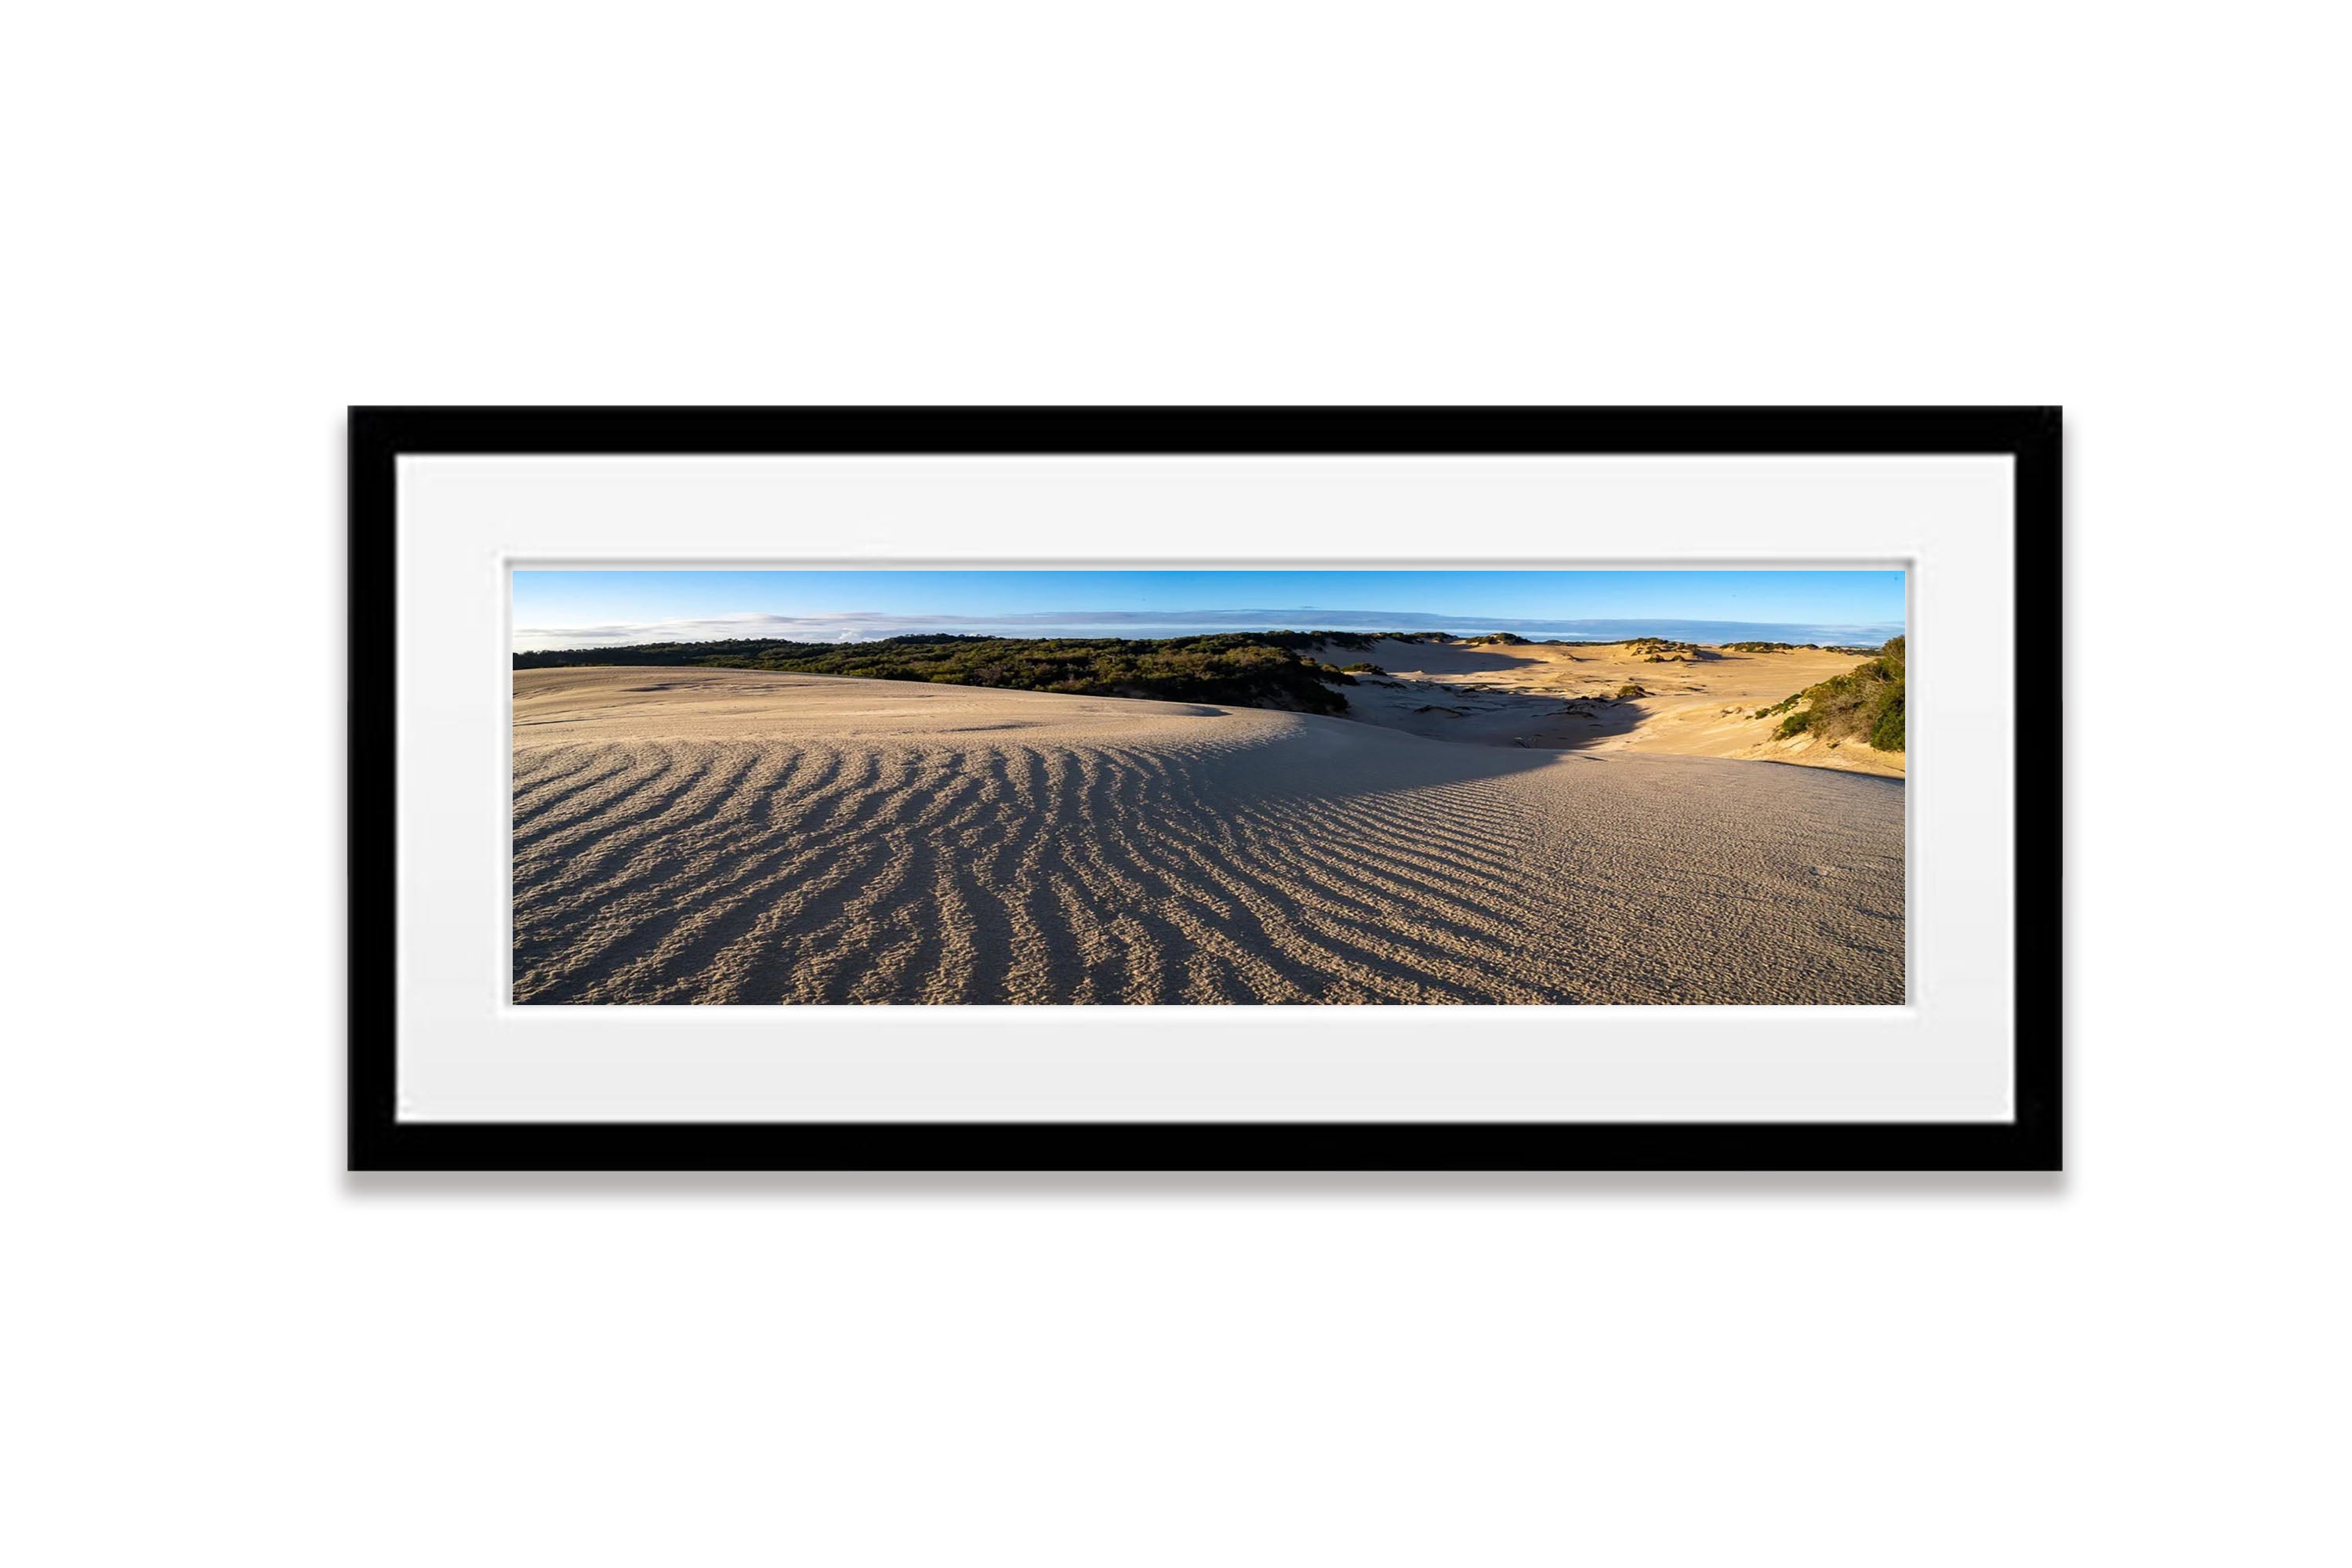 Big Drift dunes, Wilson's Promontory